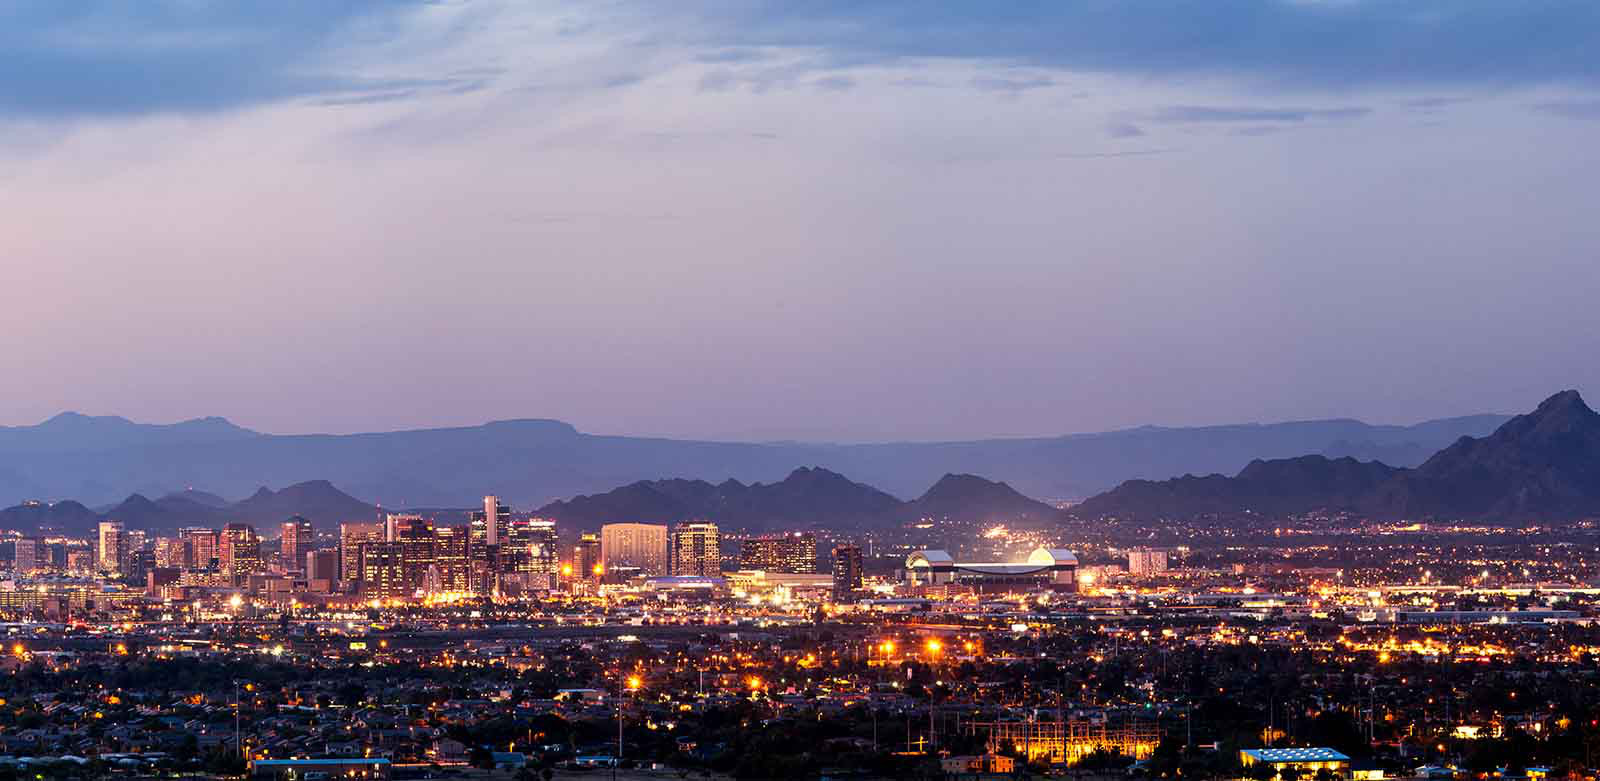 Skyline of Scottsdale, Arizona